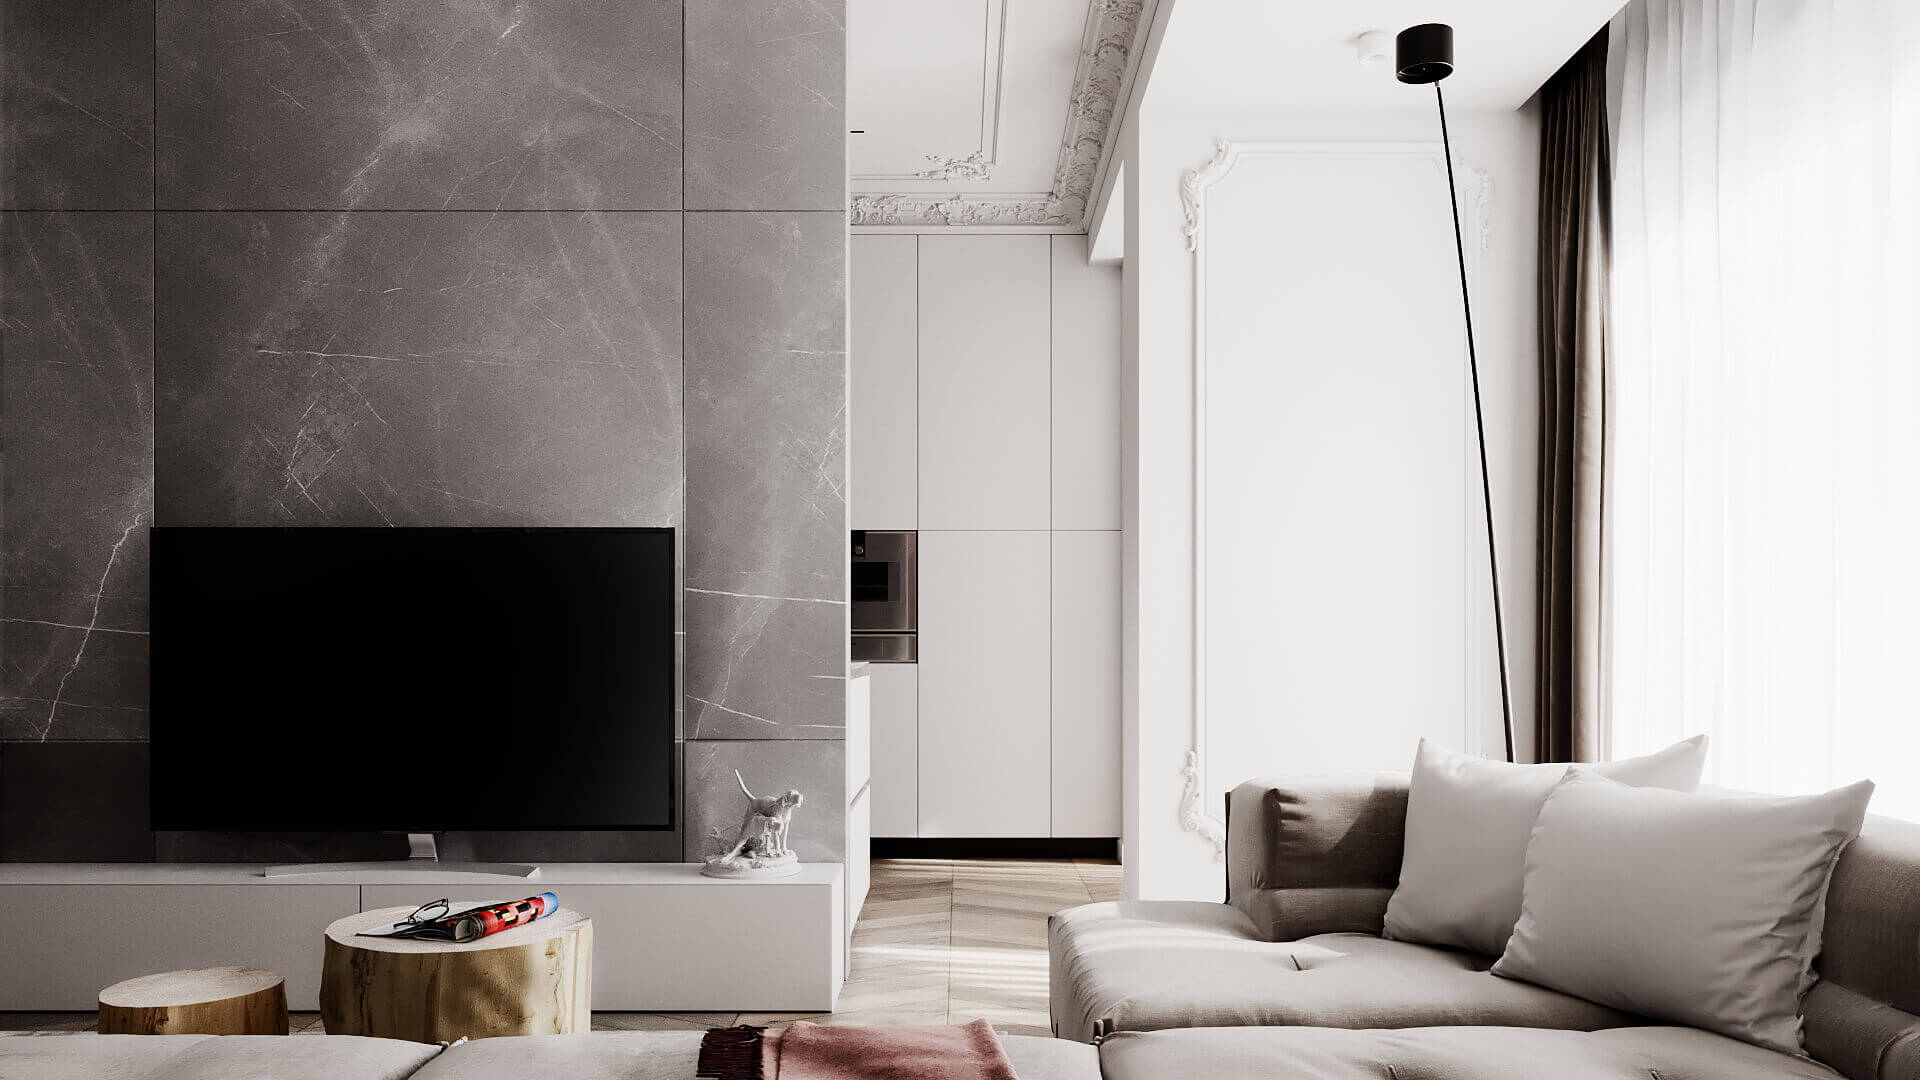 Bernardazzi Apartment living room modern design - cgi visualization